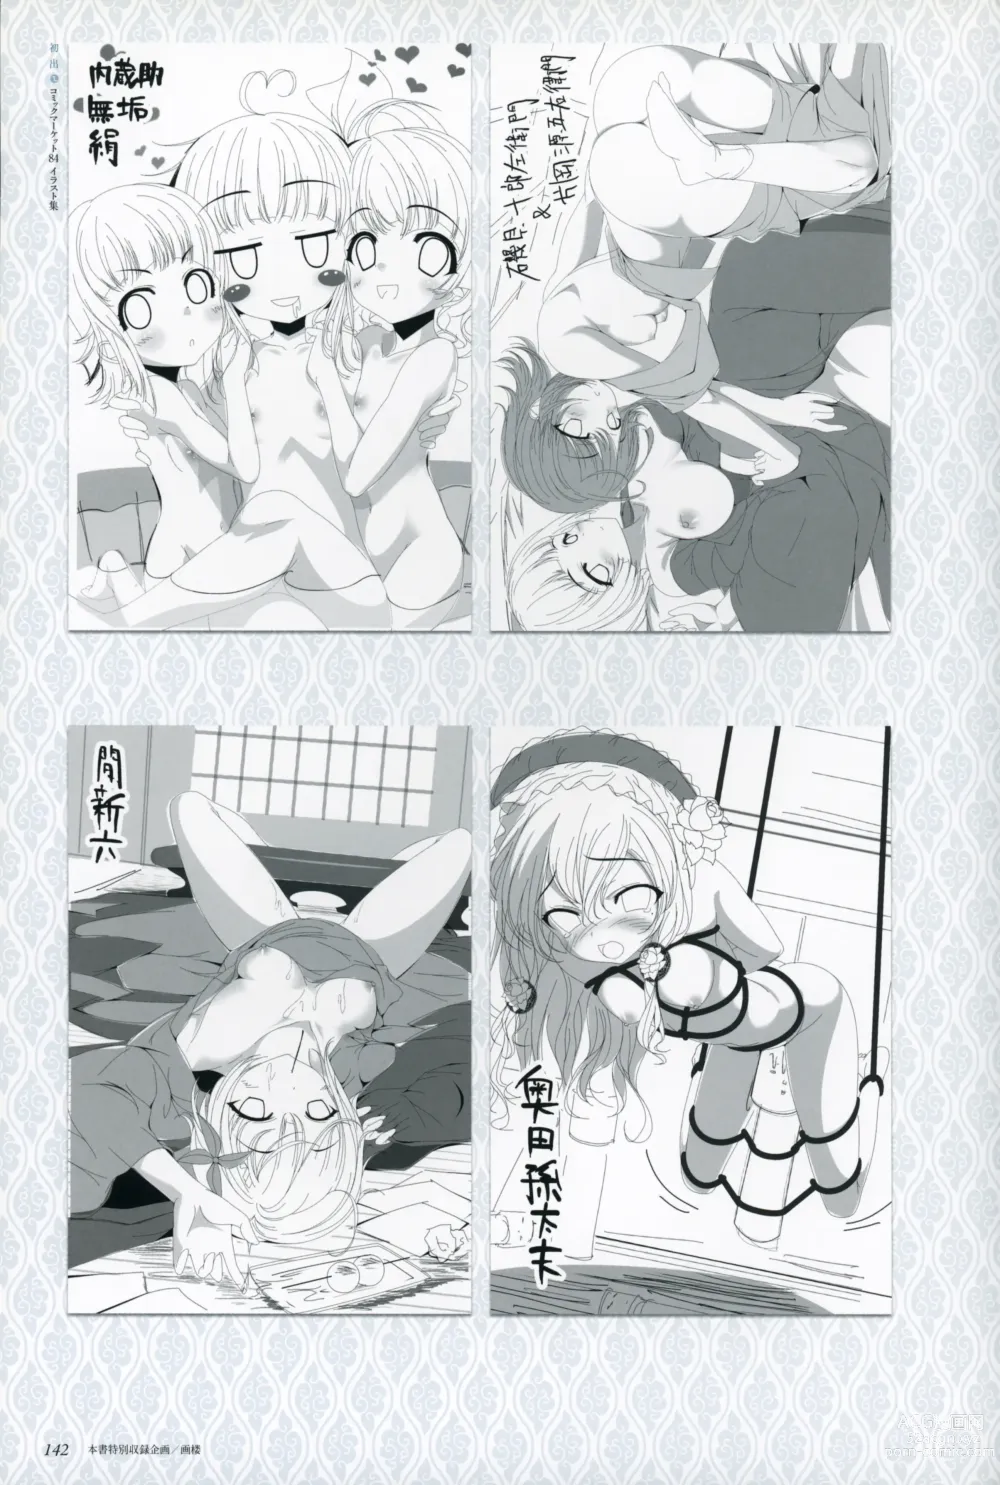 Page 144 of manga ChuSinGura 46+1 Official Visual Fan Book